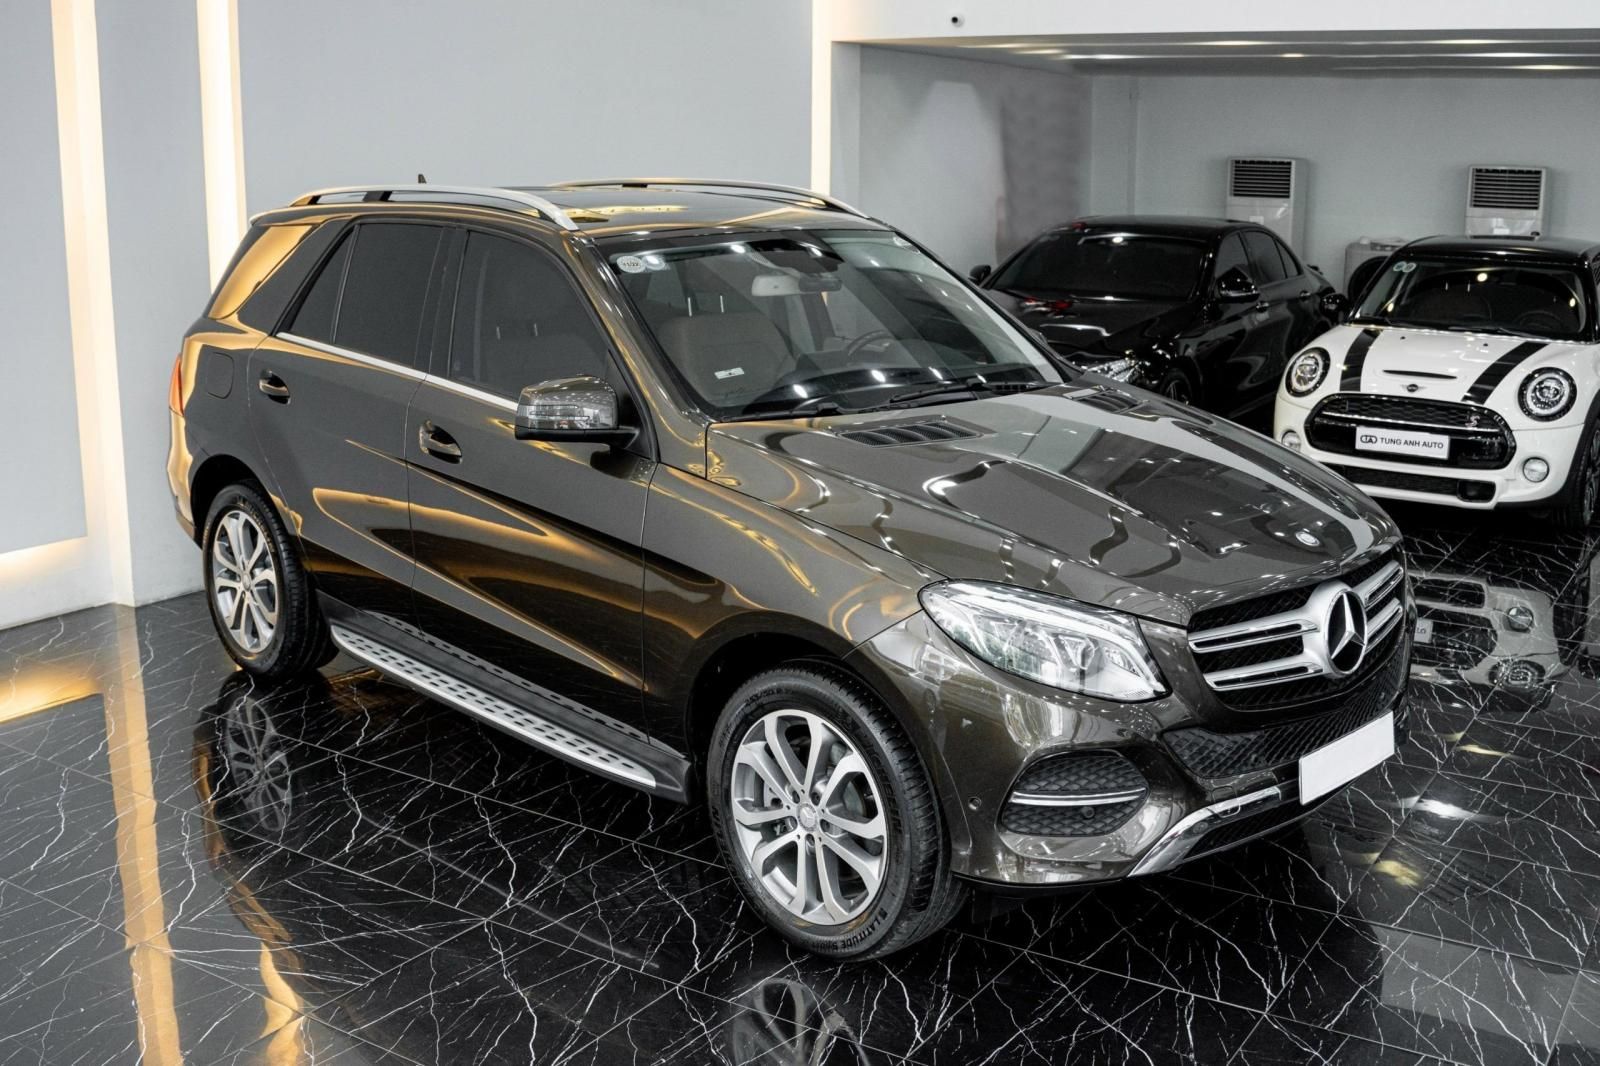 Mercedes-Benz GLE 400 2015 - Xe màu đen